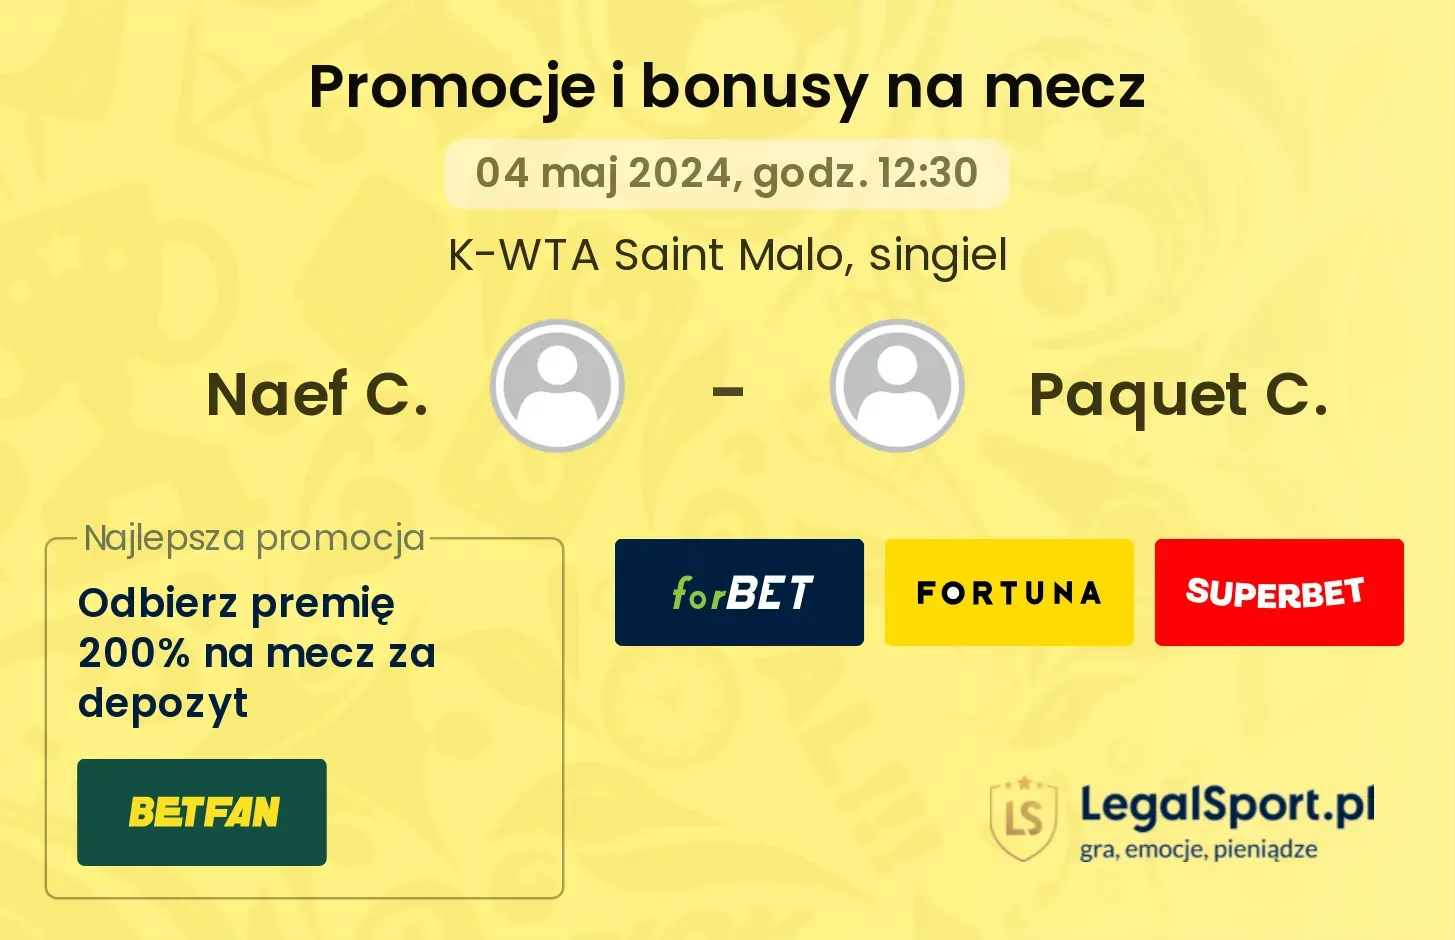 Naef C. - Paquet C. promocje bonusy na mecz